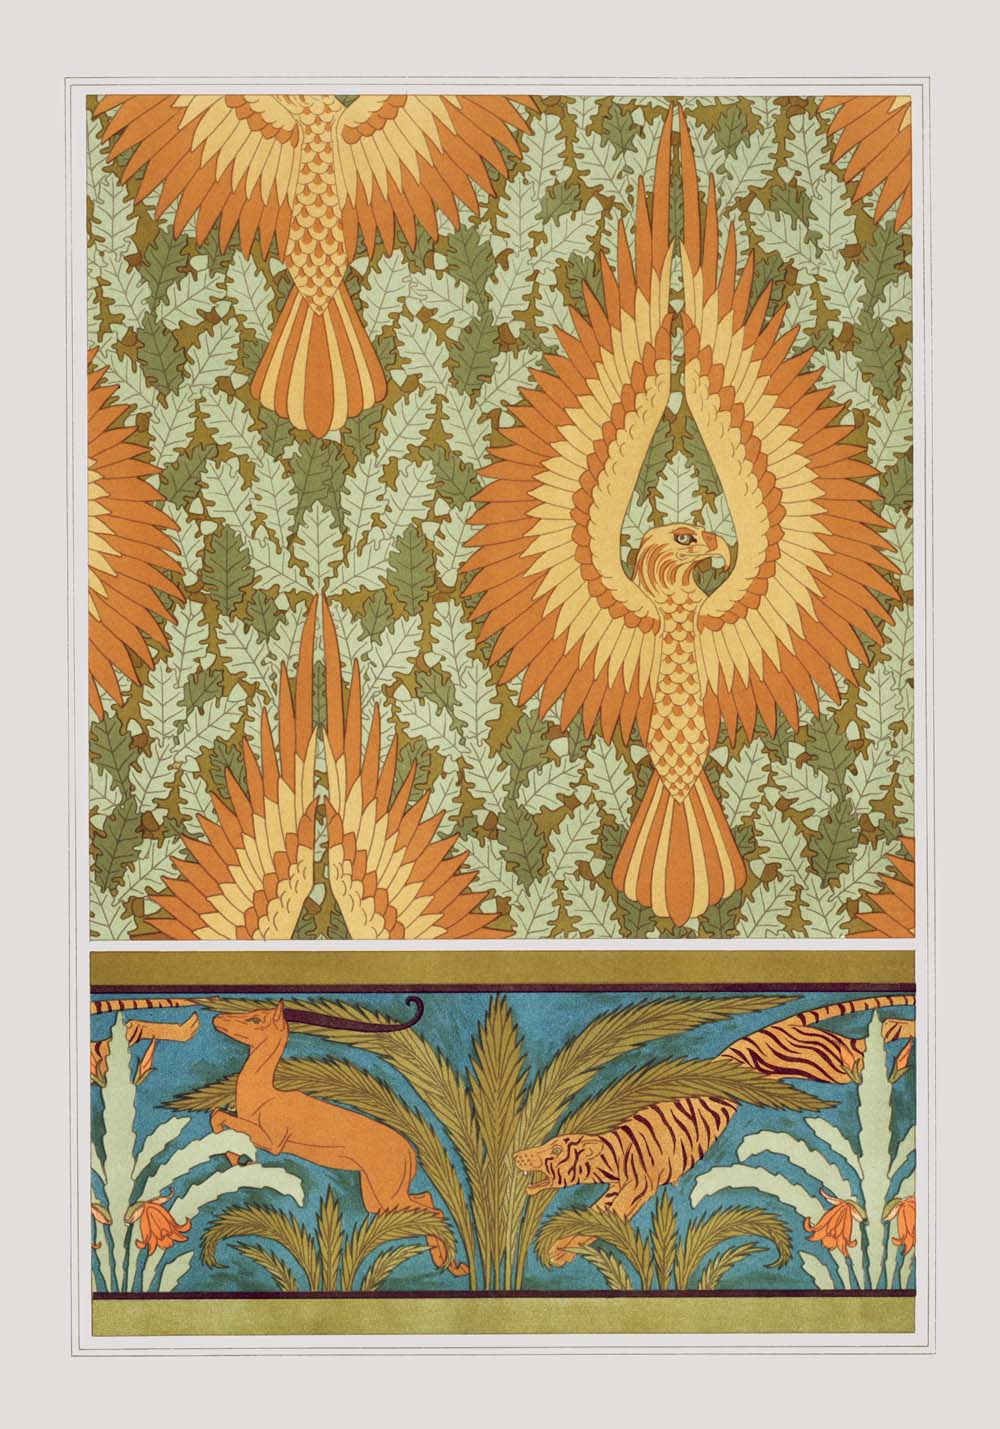 Ornamental Pattern Art Gallery Wall Set of 5 Poster